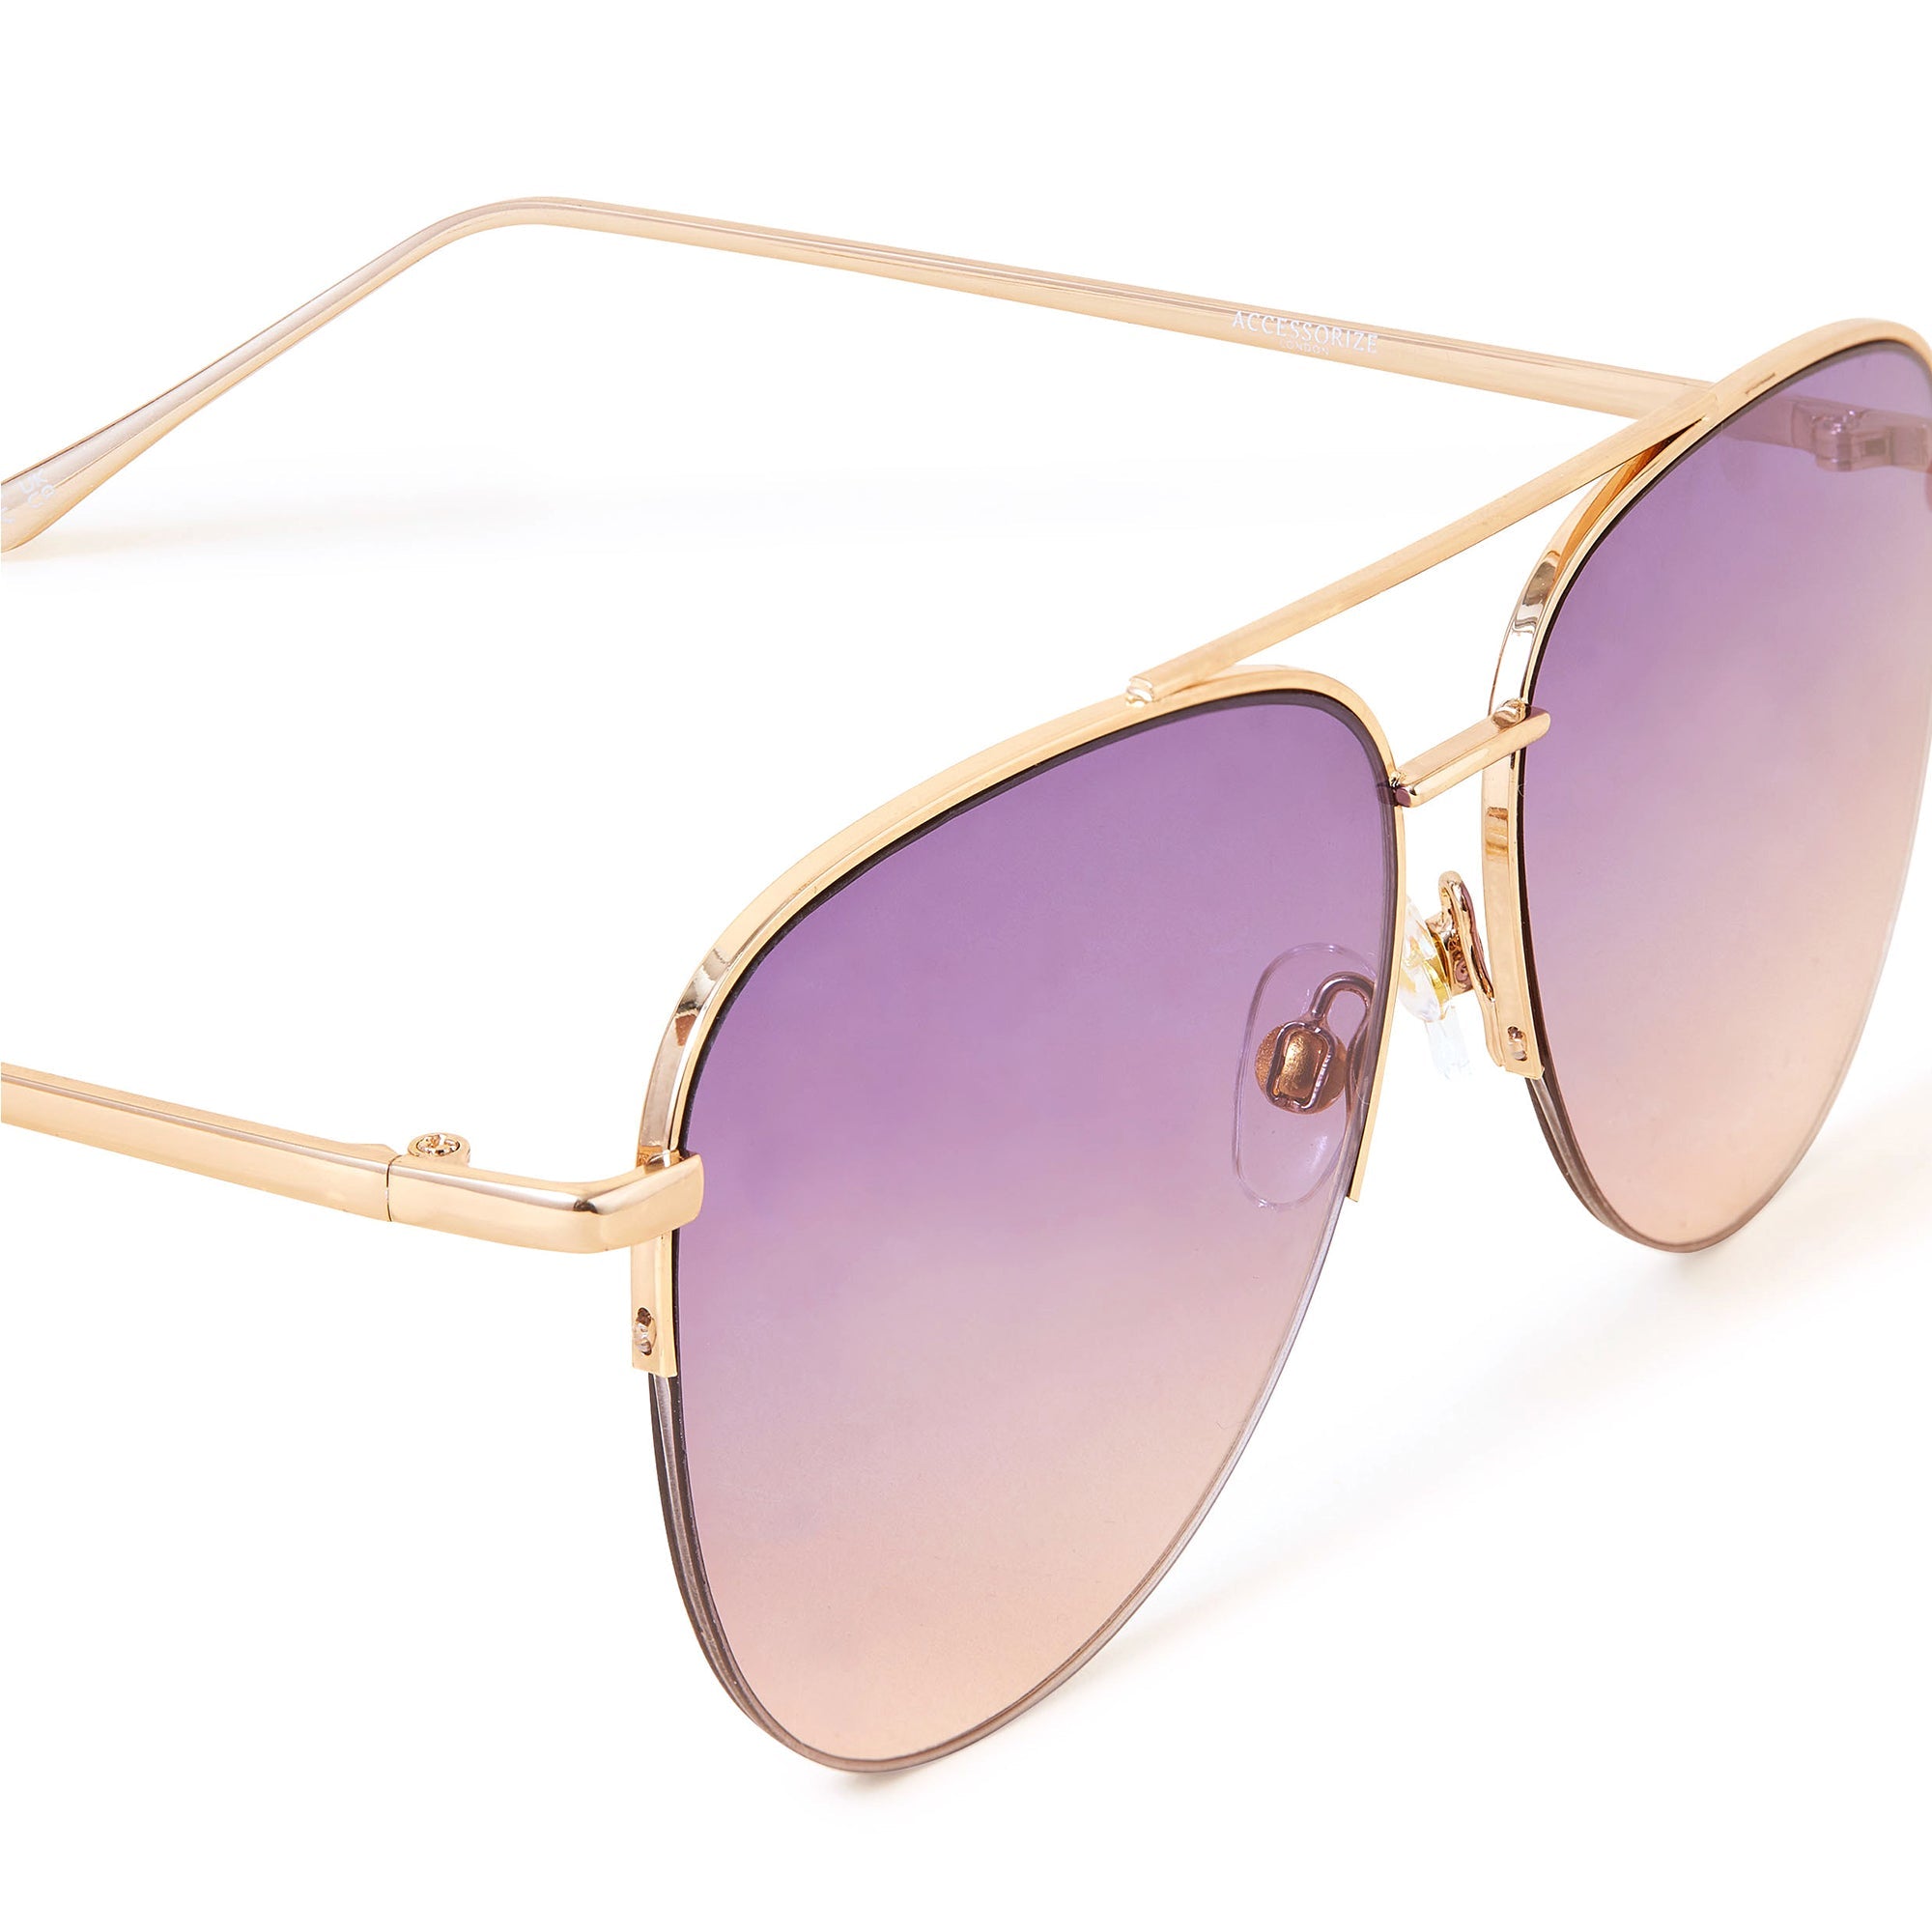 Accessorize London Women's Purple Half Frame Aviator Sunglasses